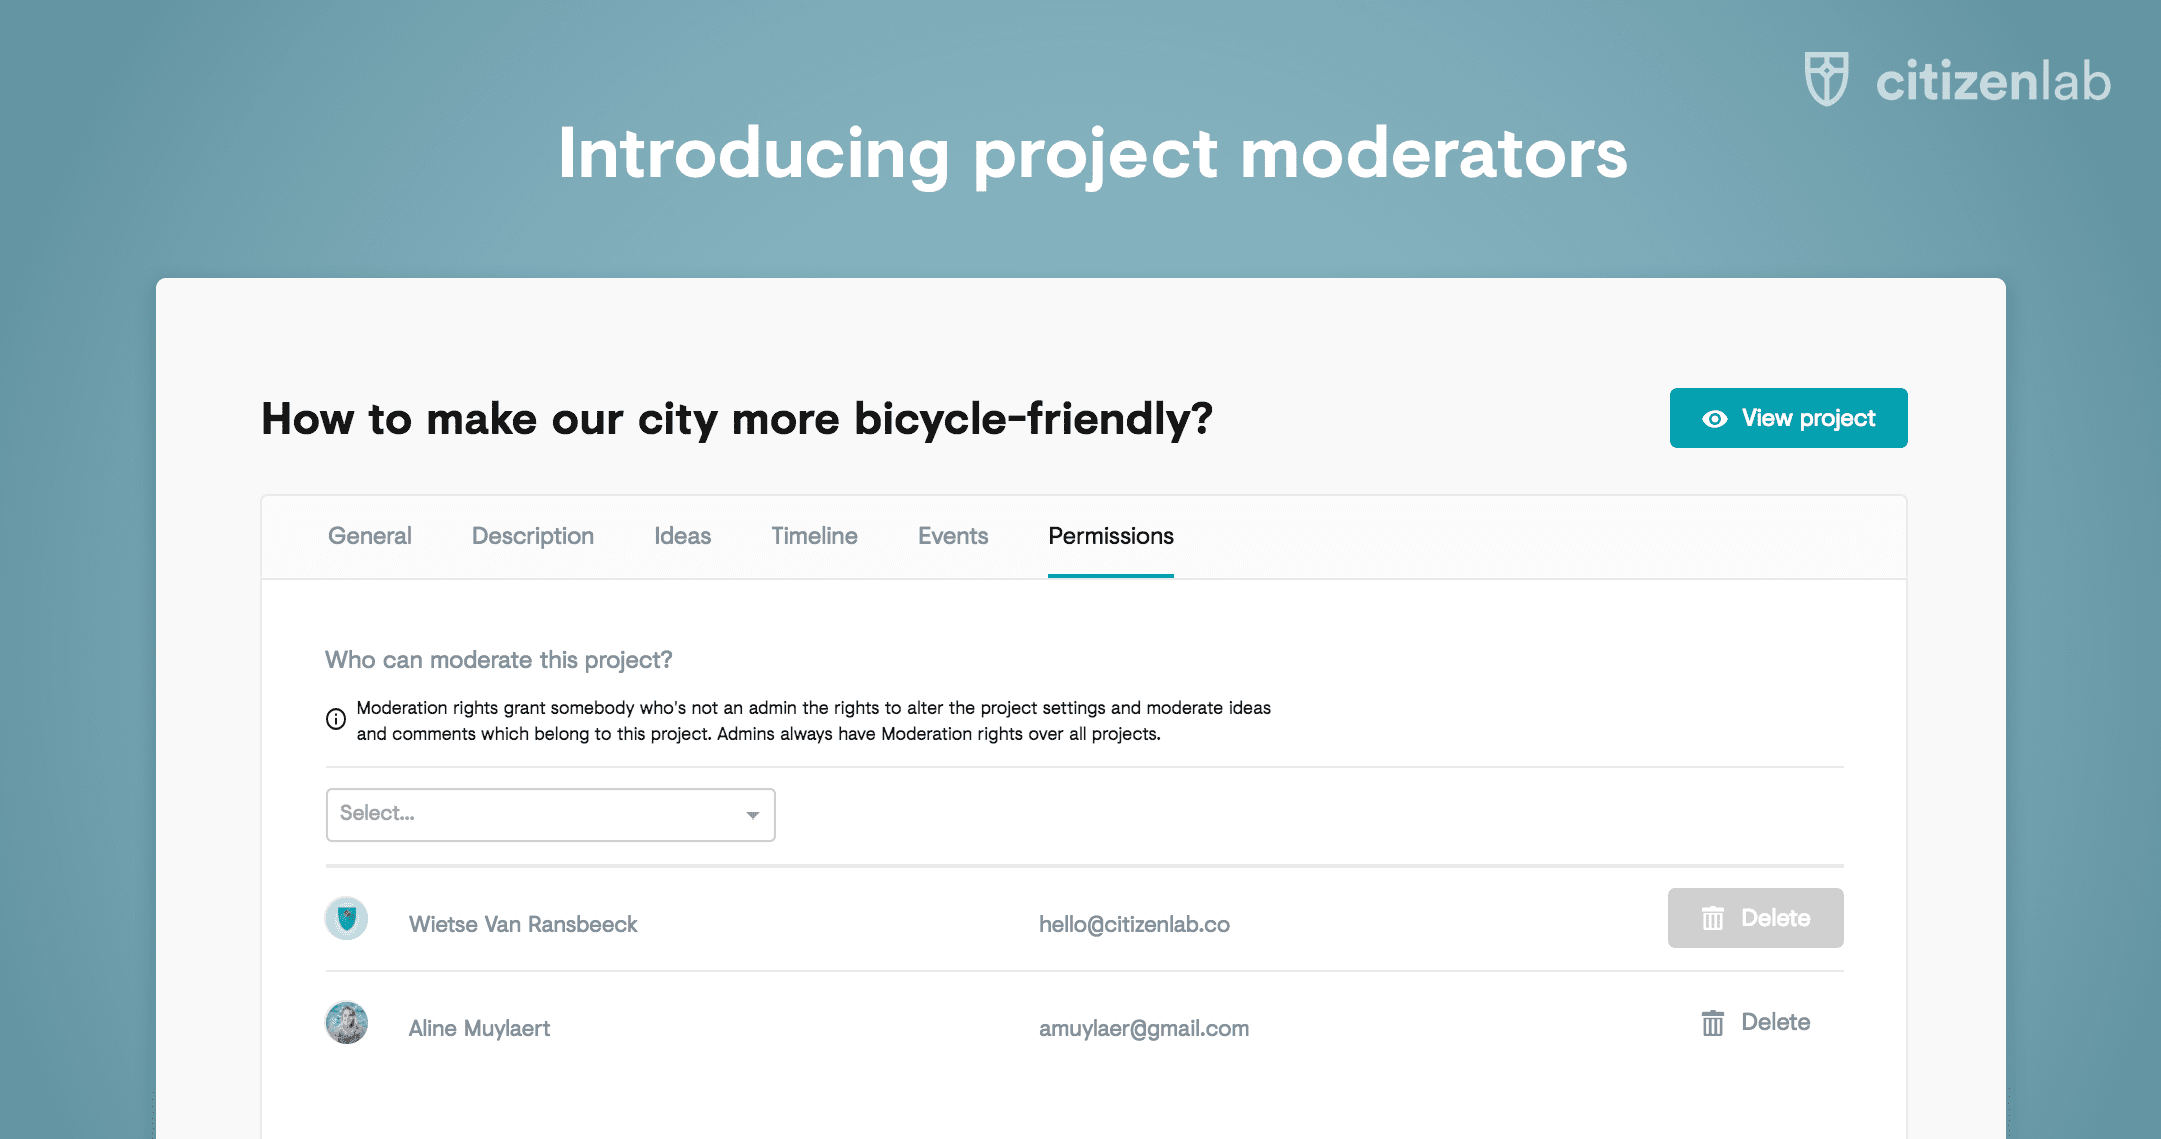 Project moderators